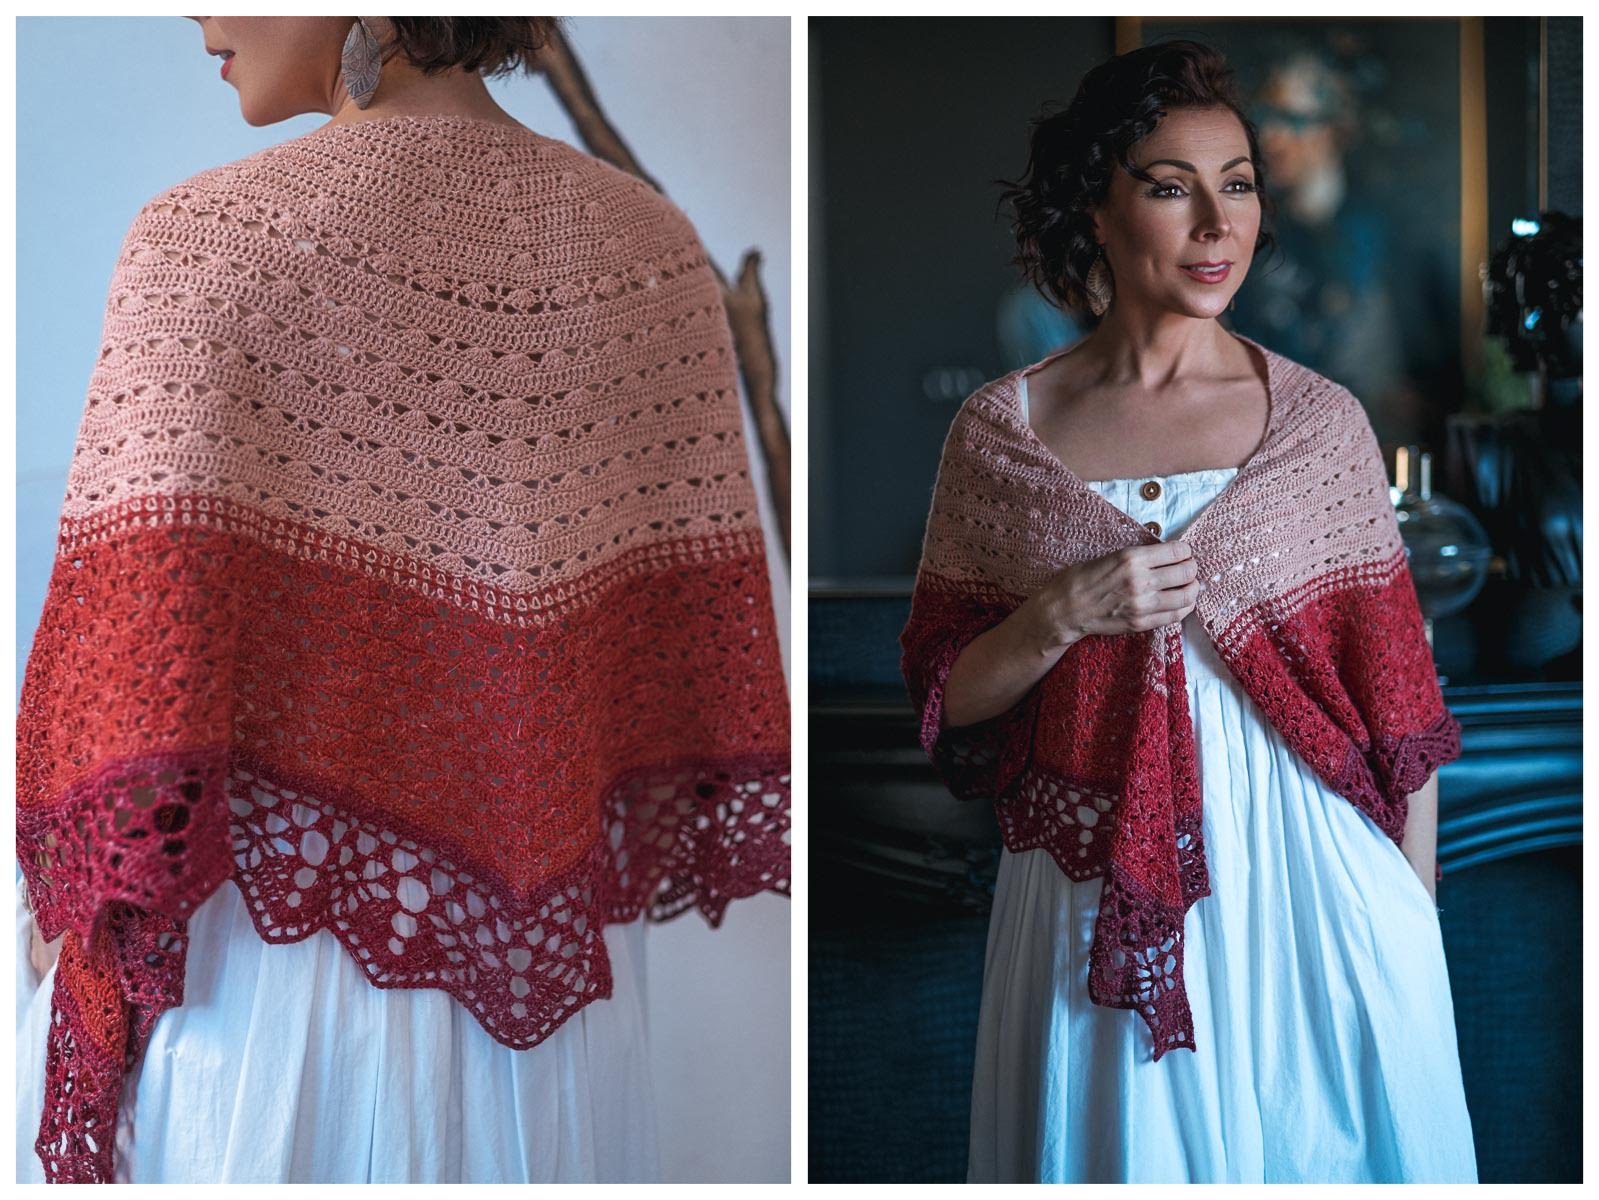 Romantic Crochet Lace Shawl Patterns (Ultimate List) 